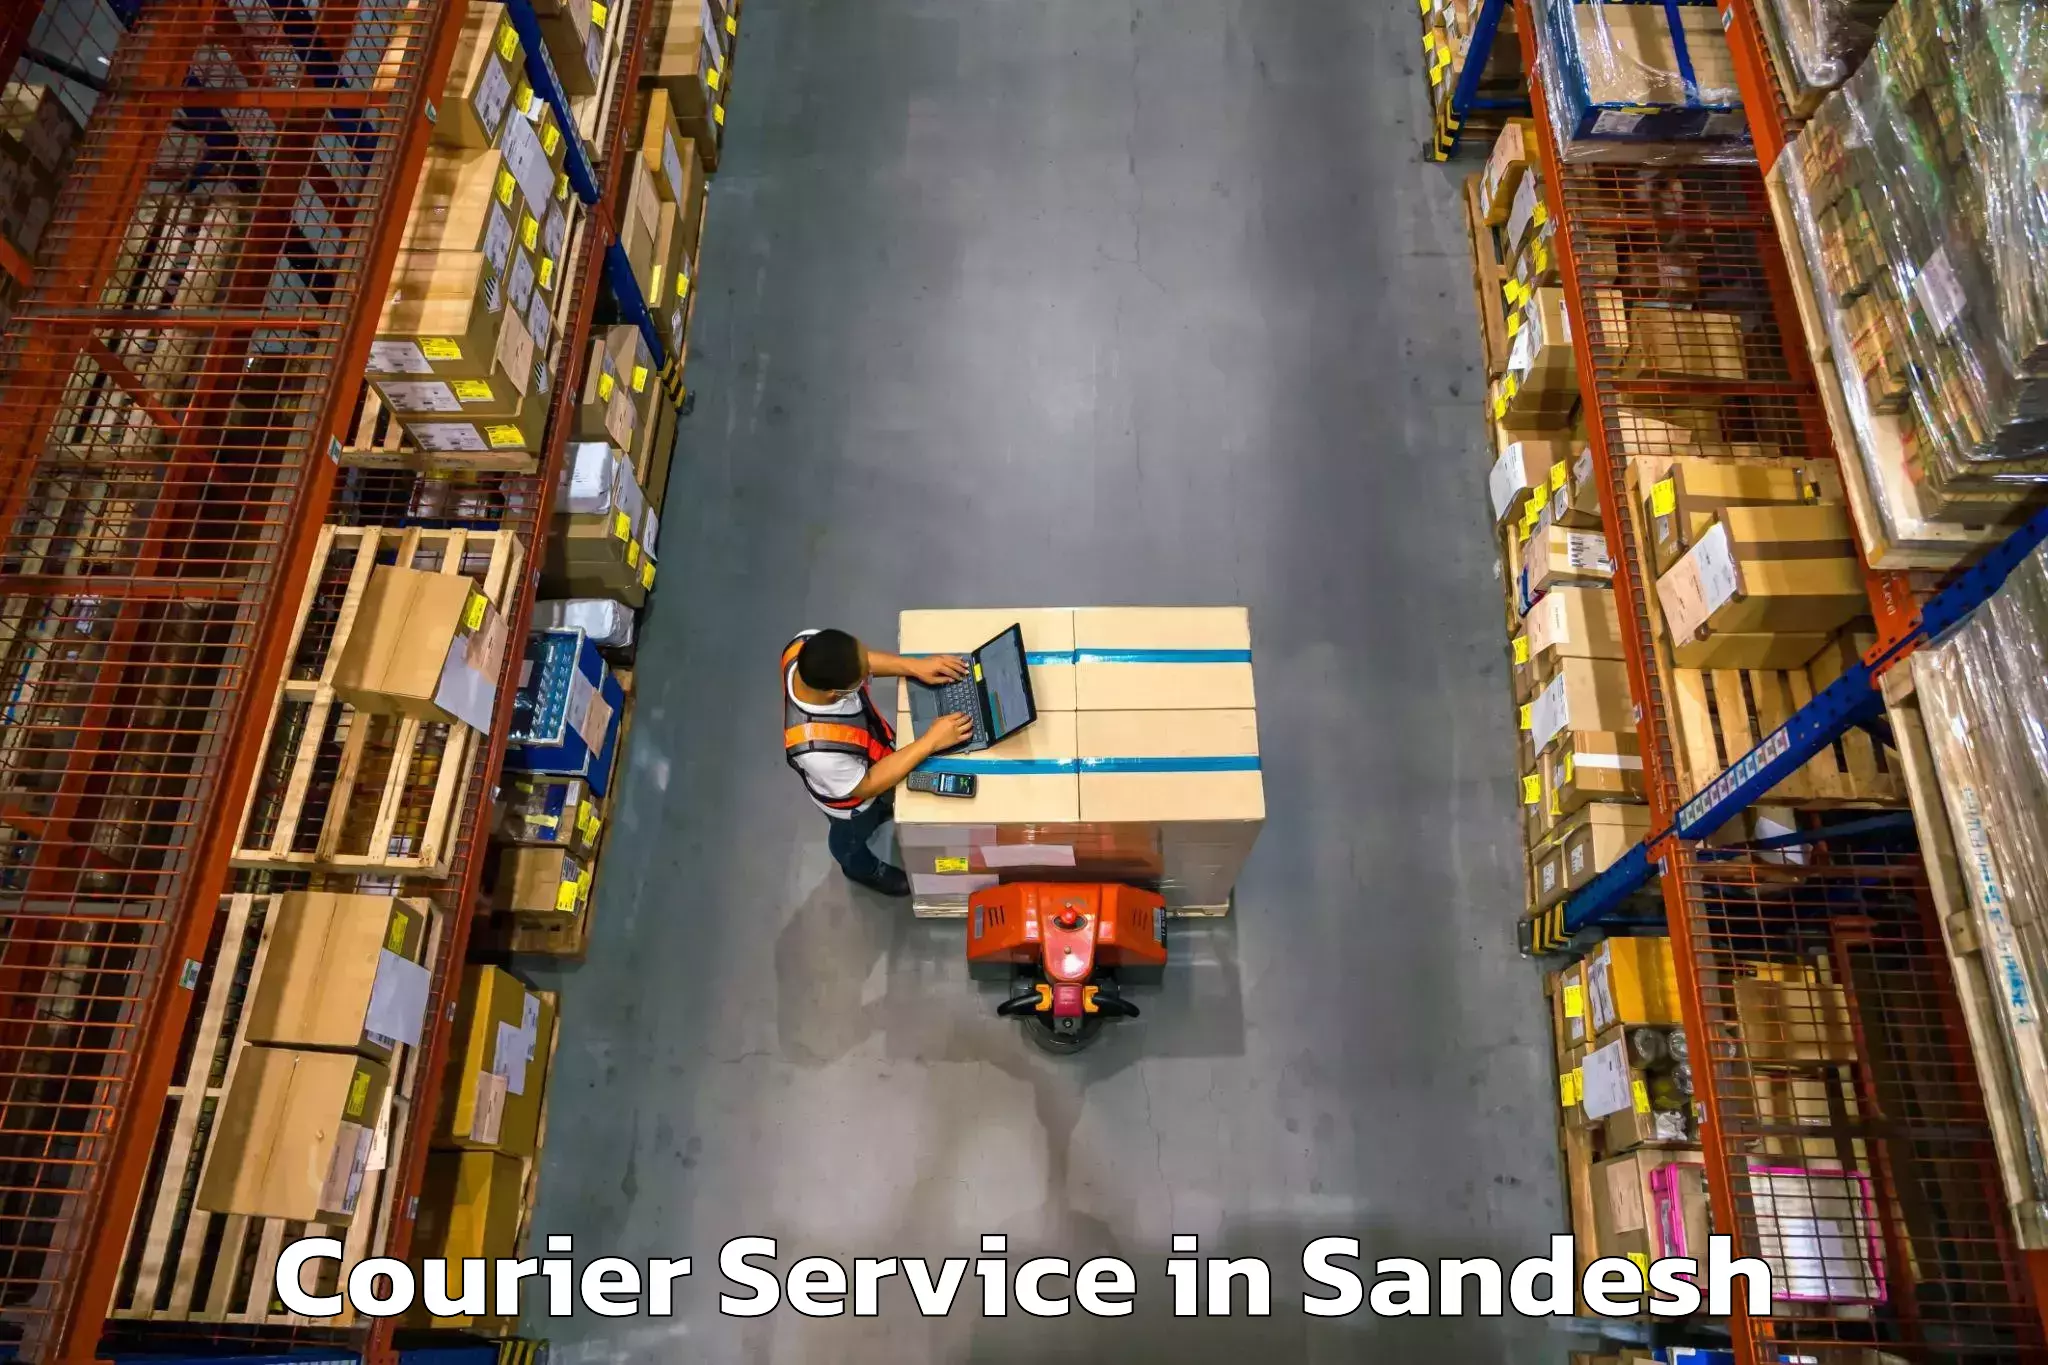 Efficient parcel service in Sandesh